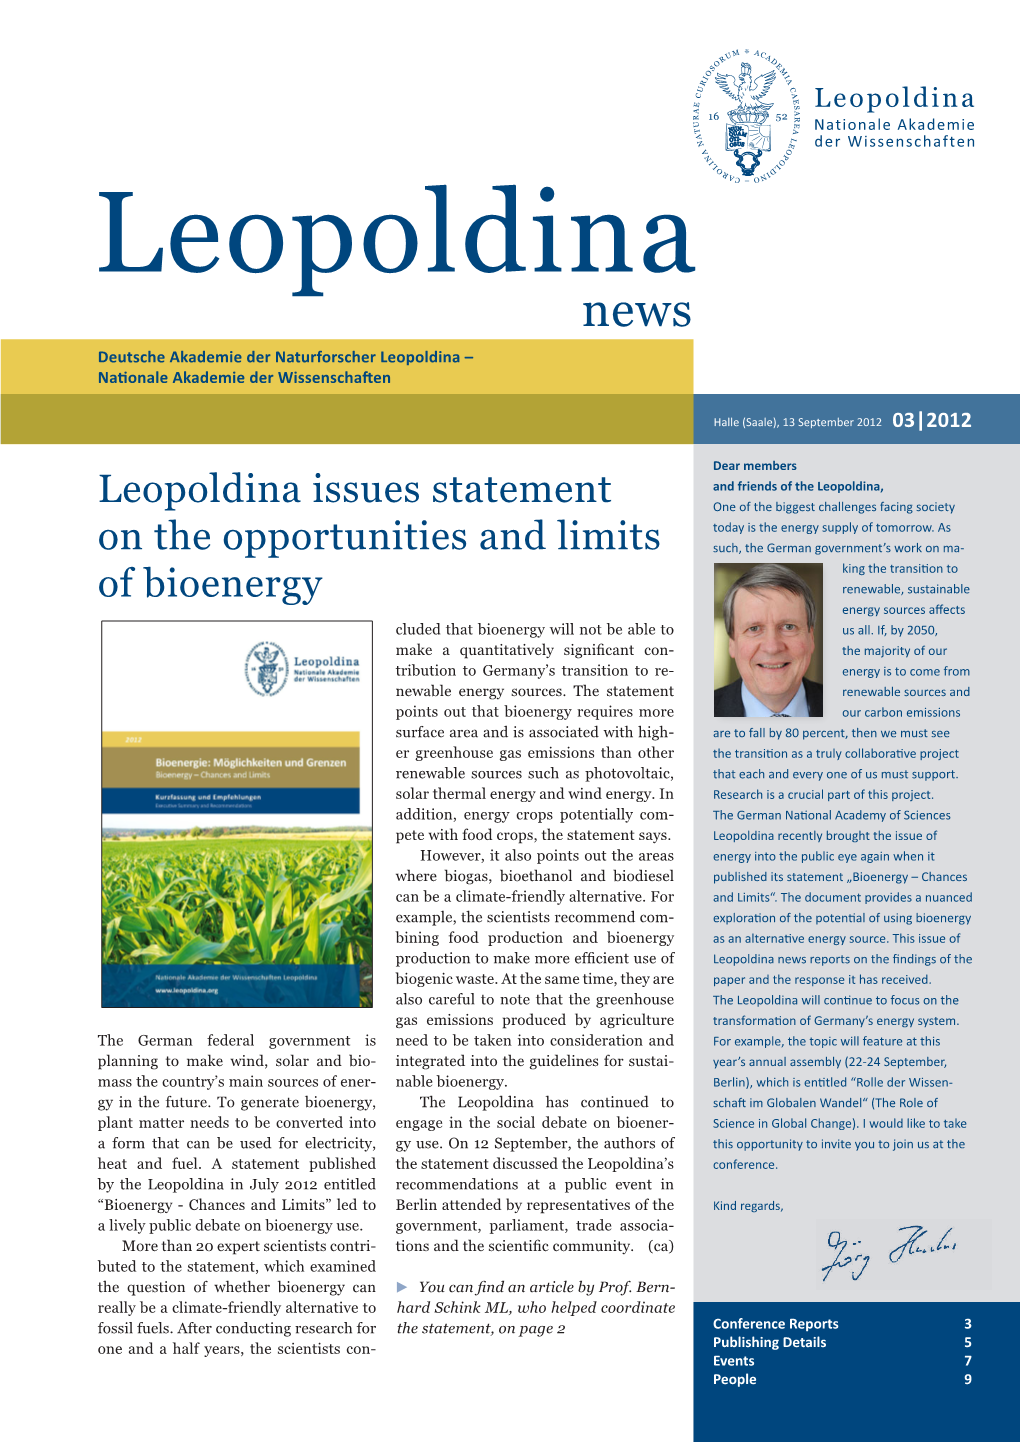 Leopoldina News 03